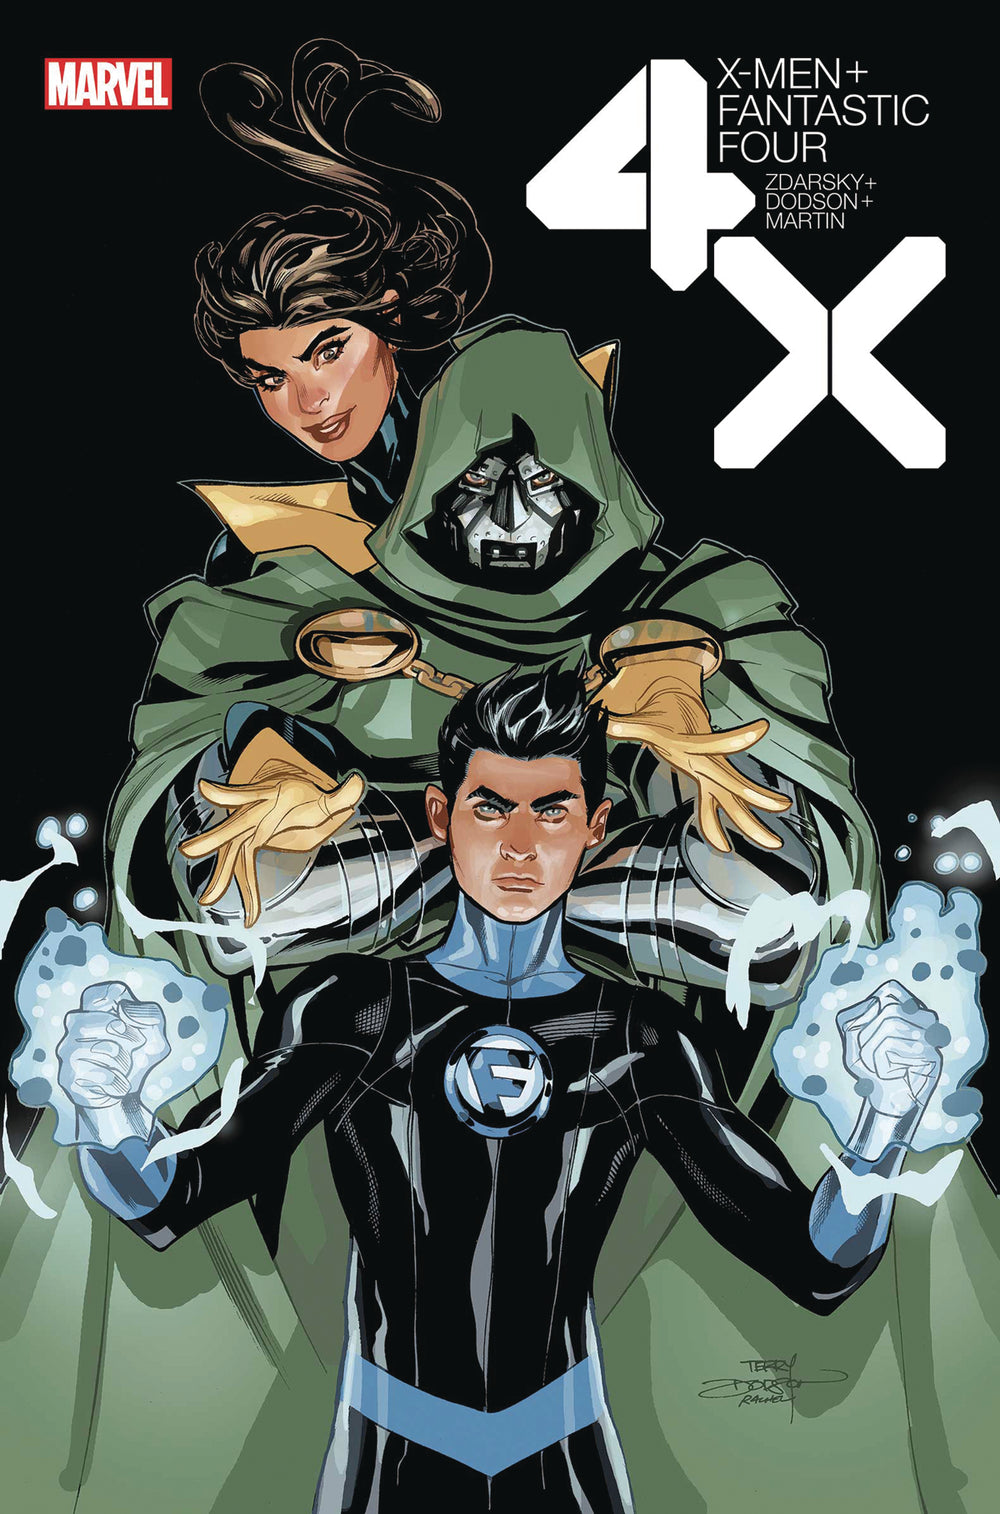 X-MEN FANTASTIC FOUR #4 (OF 4)